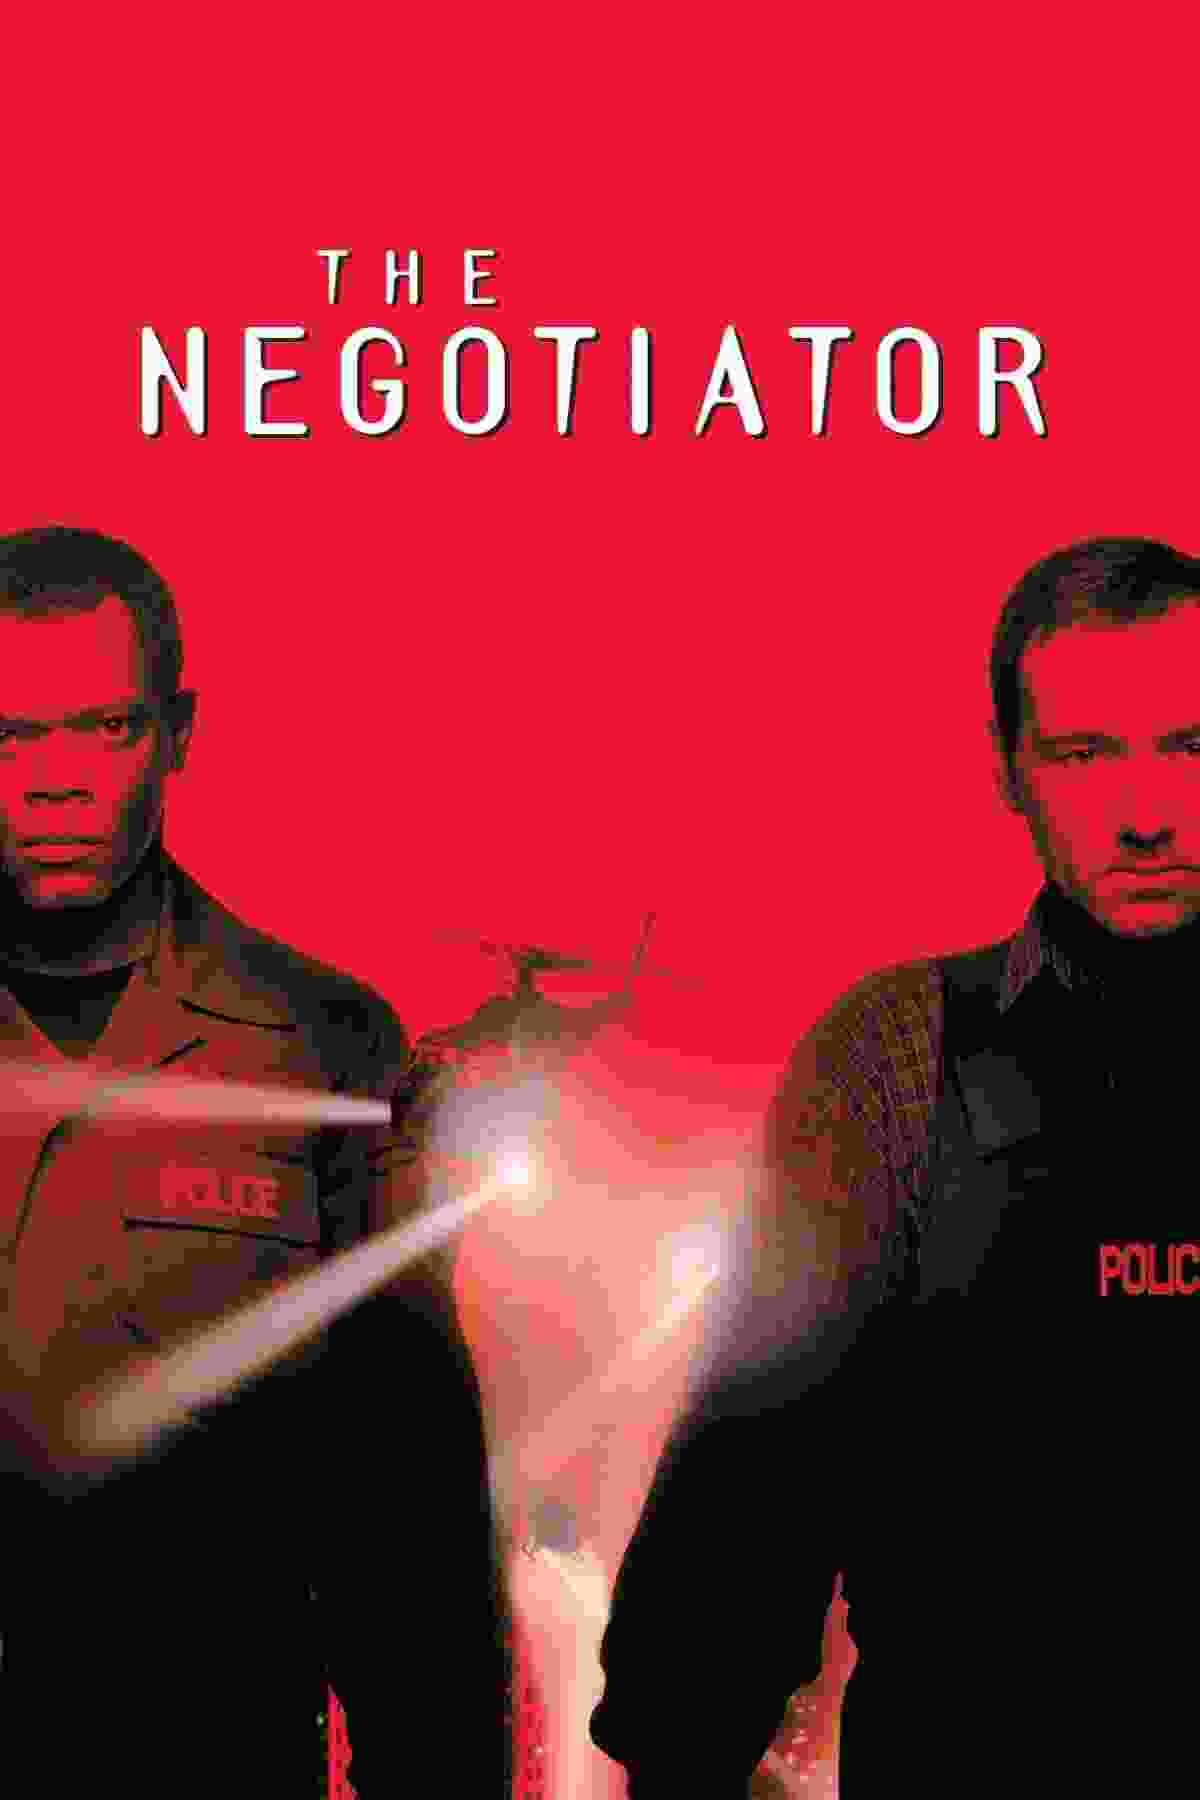 The Negotiator (1998) Samuel L. Jackson